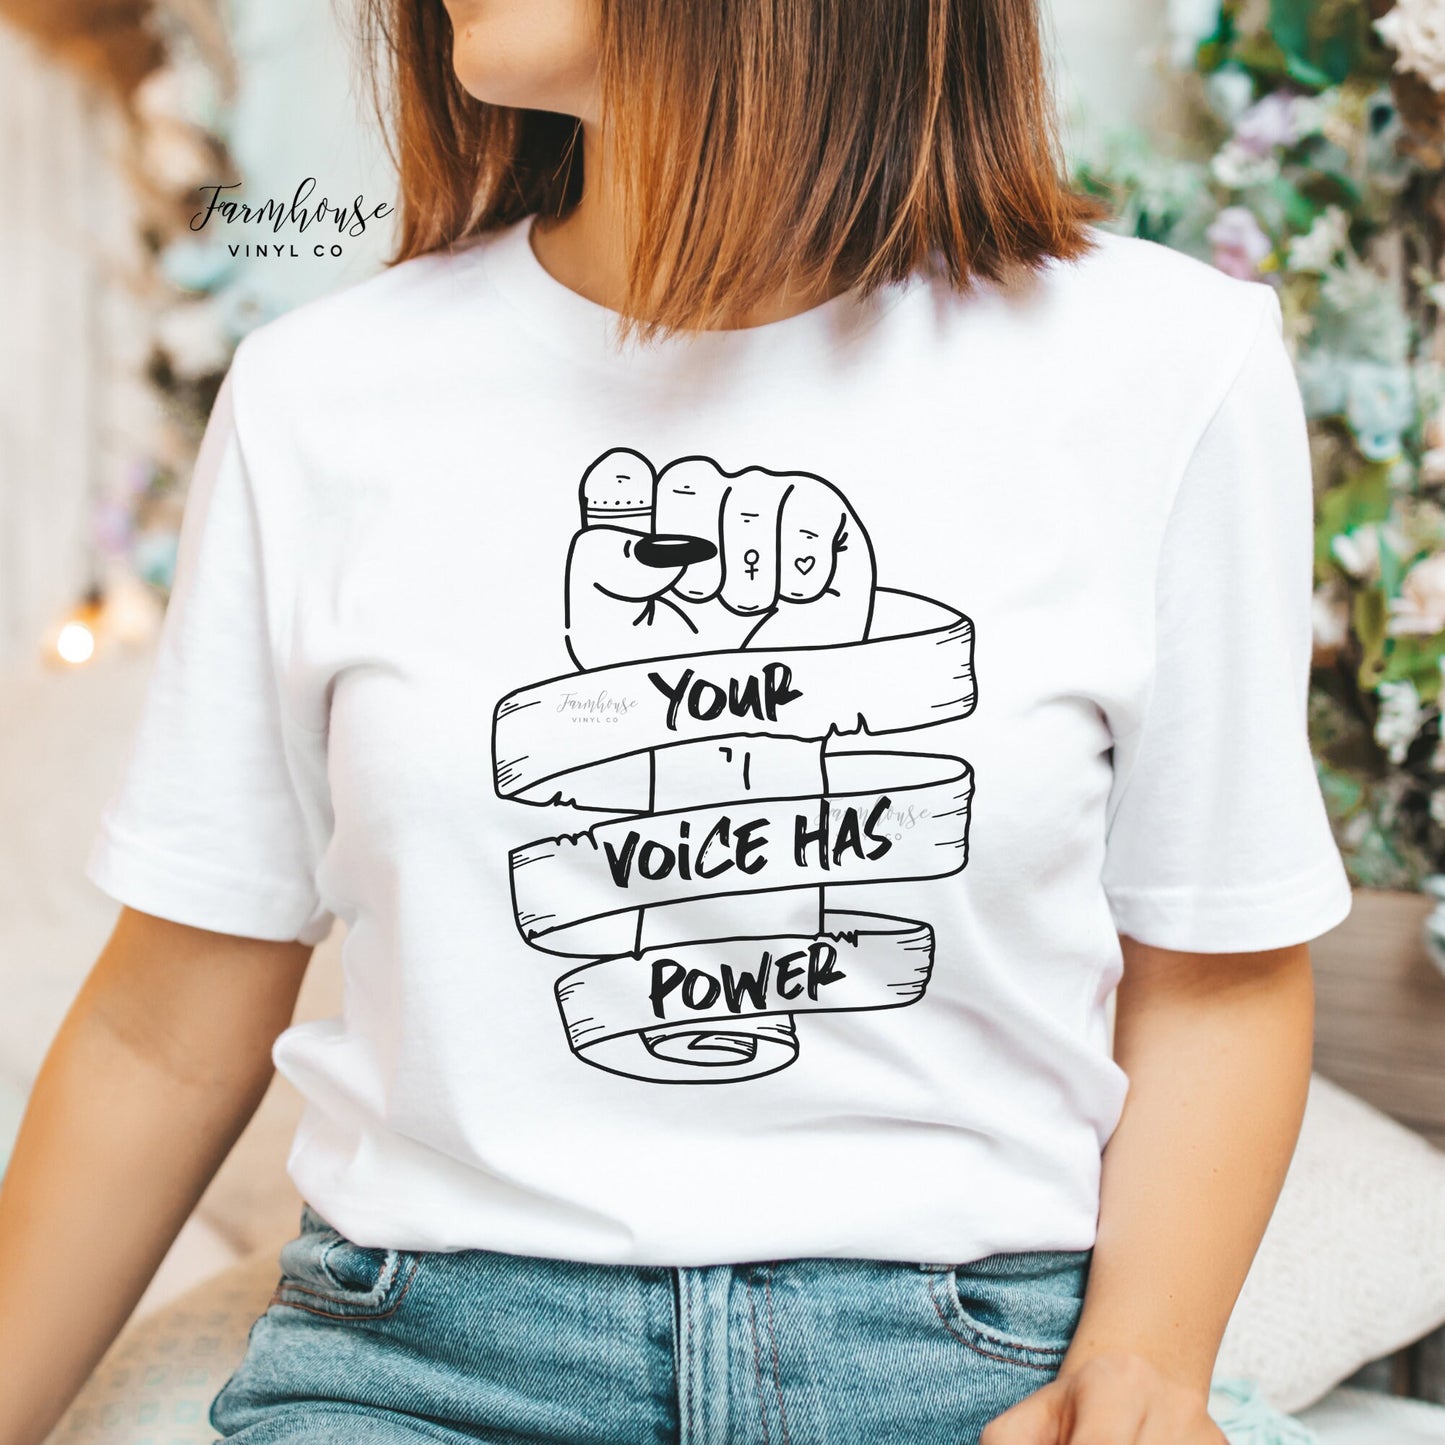 Your Voice Has Power Shirt - Farmhouse Vinyl Co